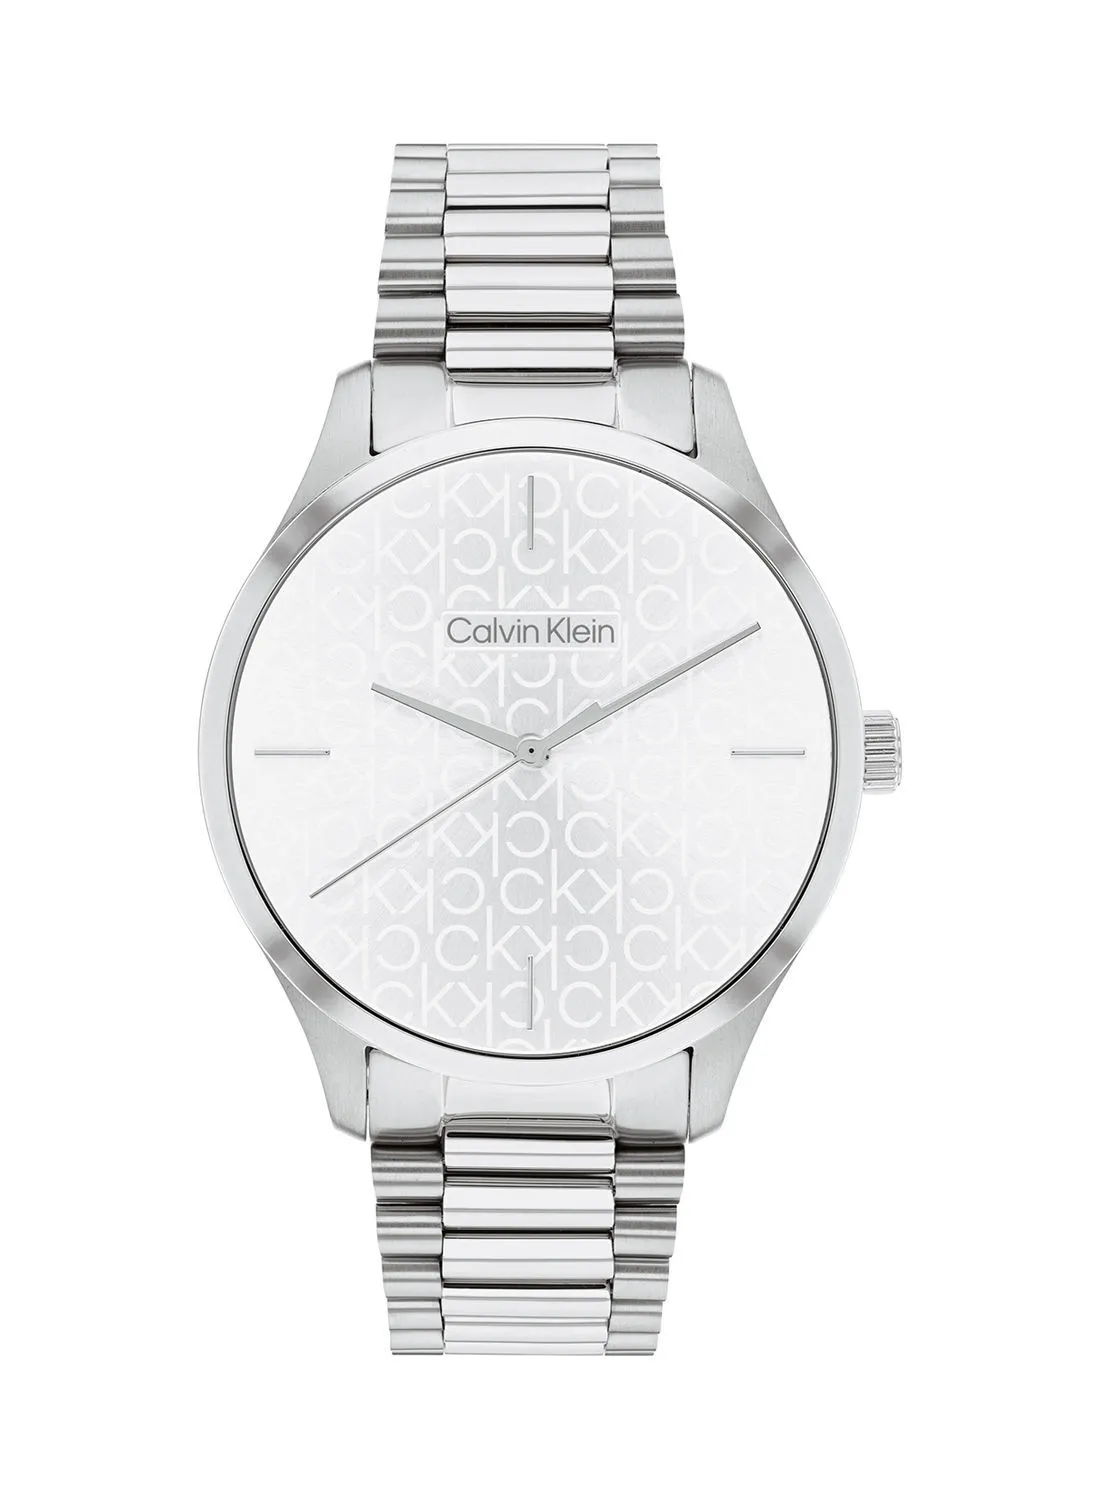 CALVIN KLEIN Iconic Unisex'S Stainless Steel Watch - 25200168